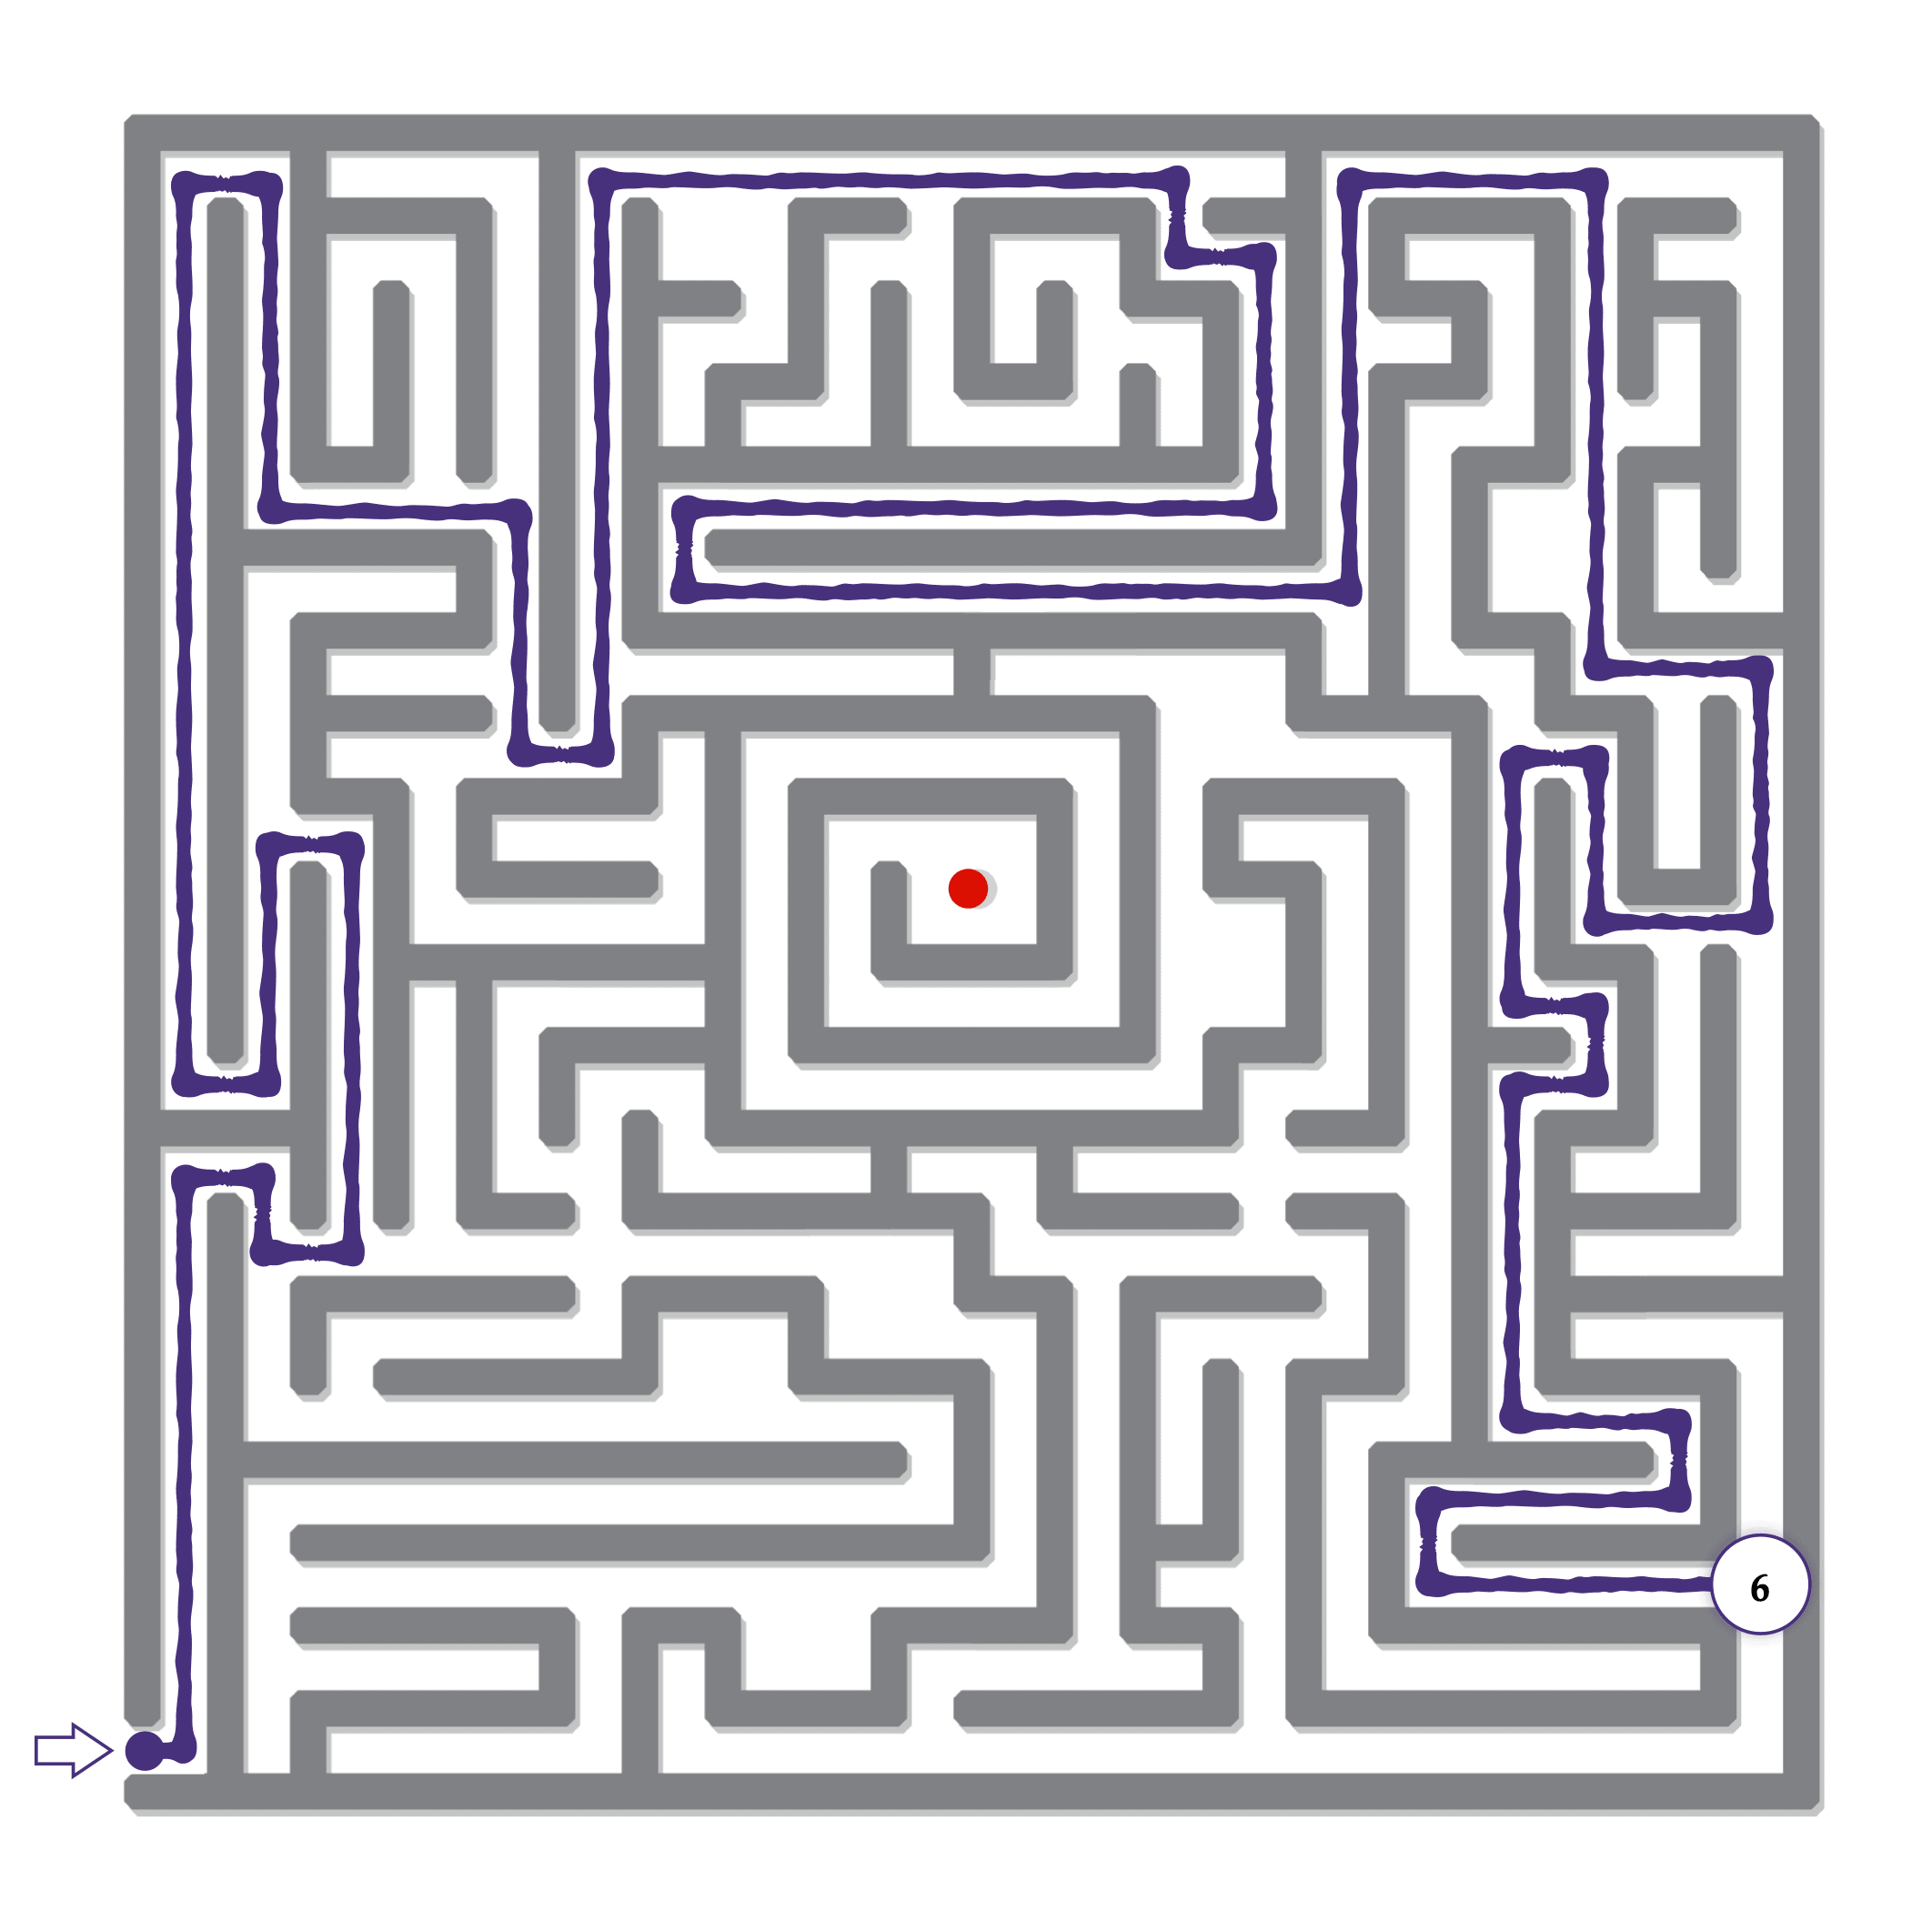 5345220 Maze step 6